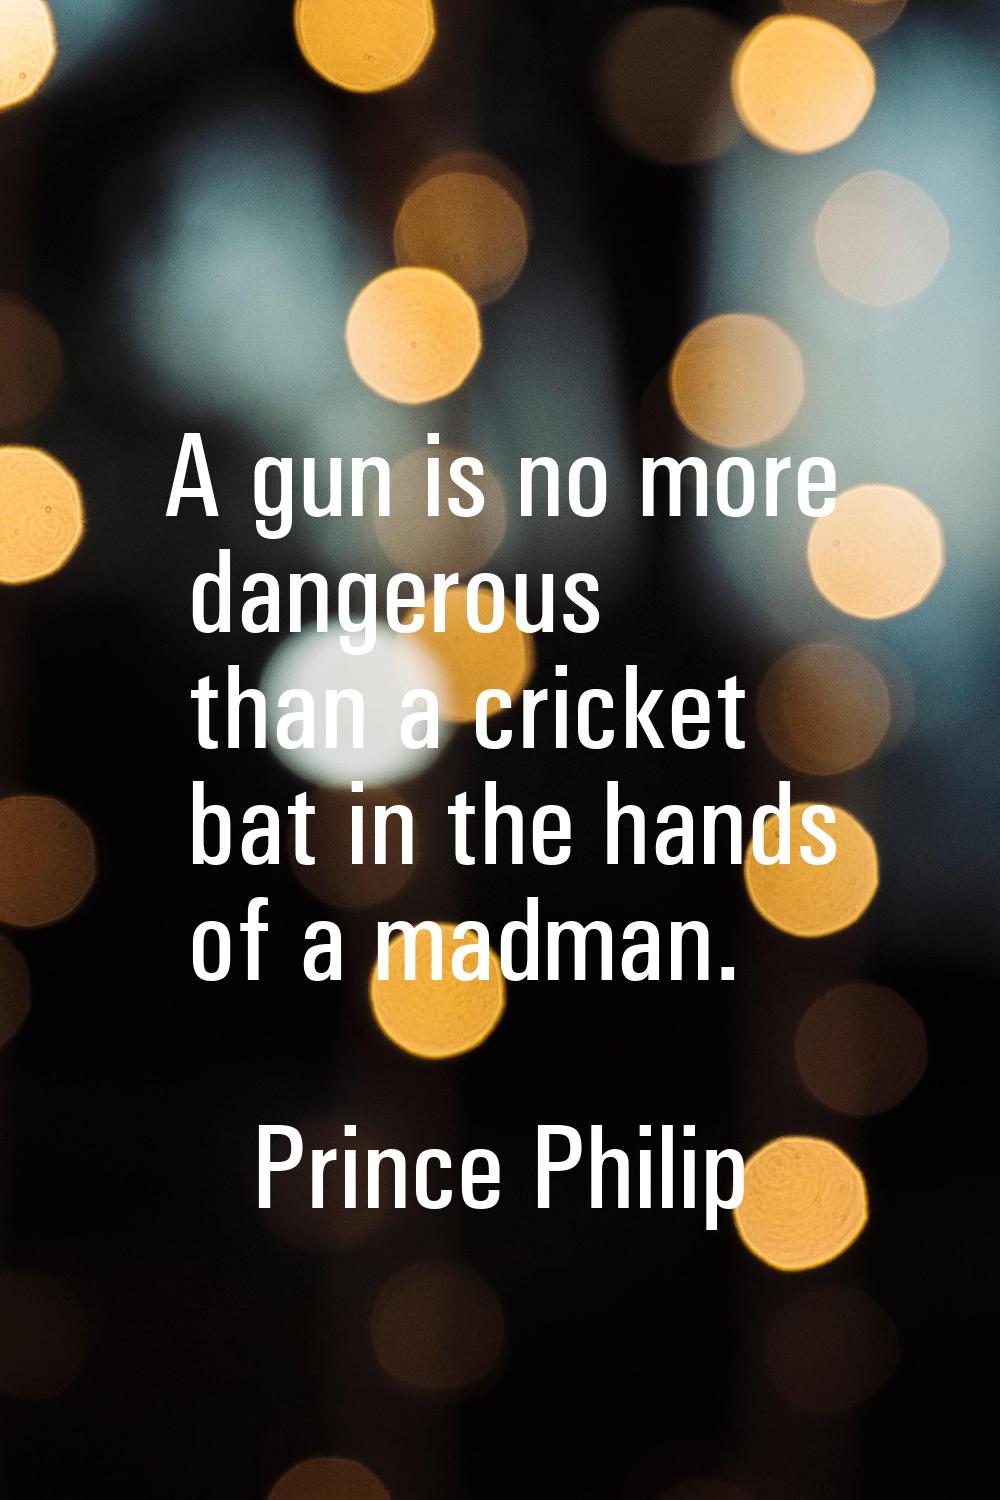 A gun is no more dangerous than a cricket bat in the hands of a madman.